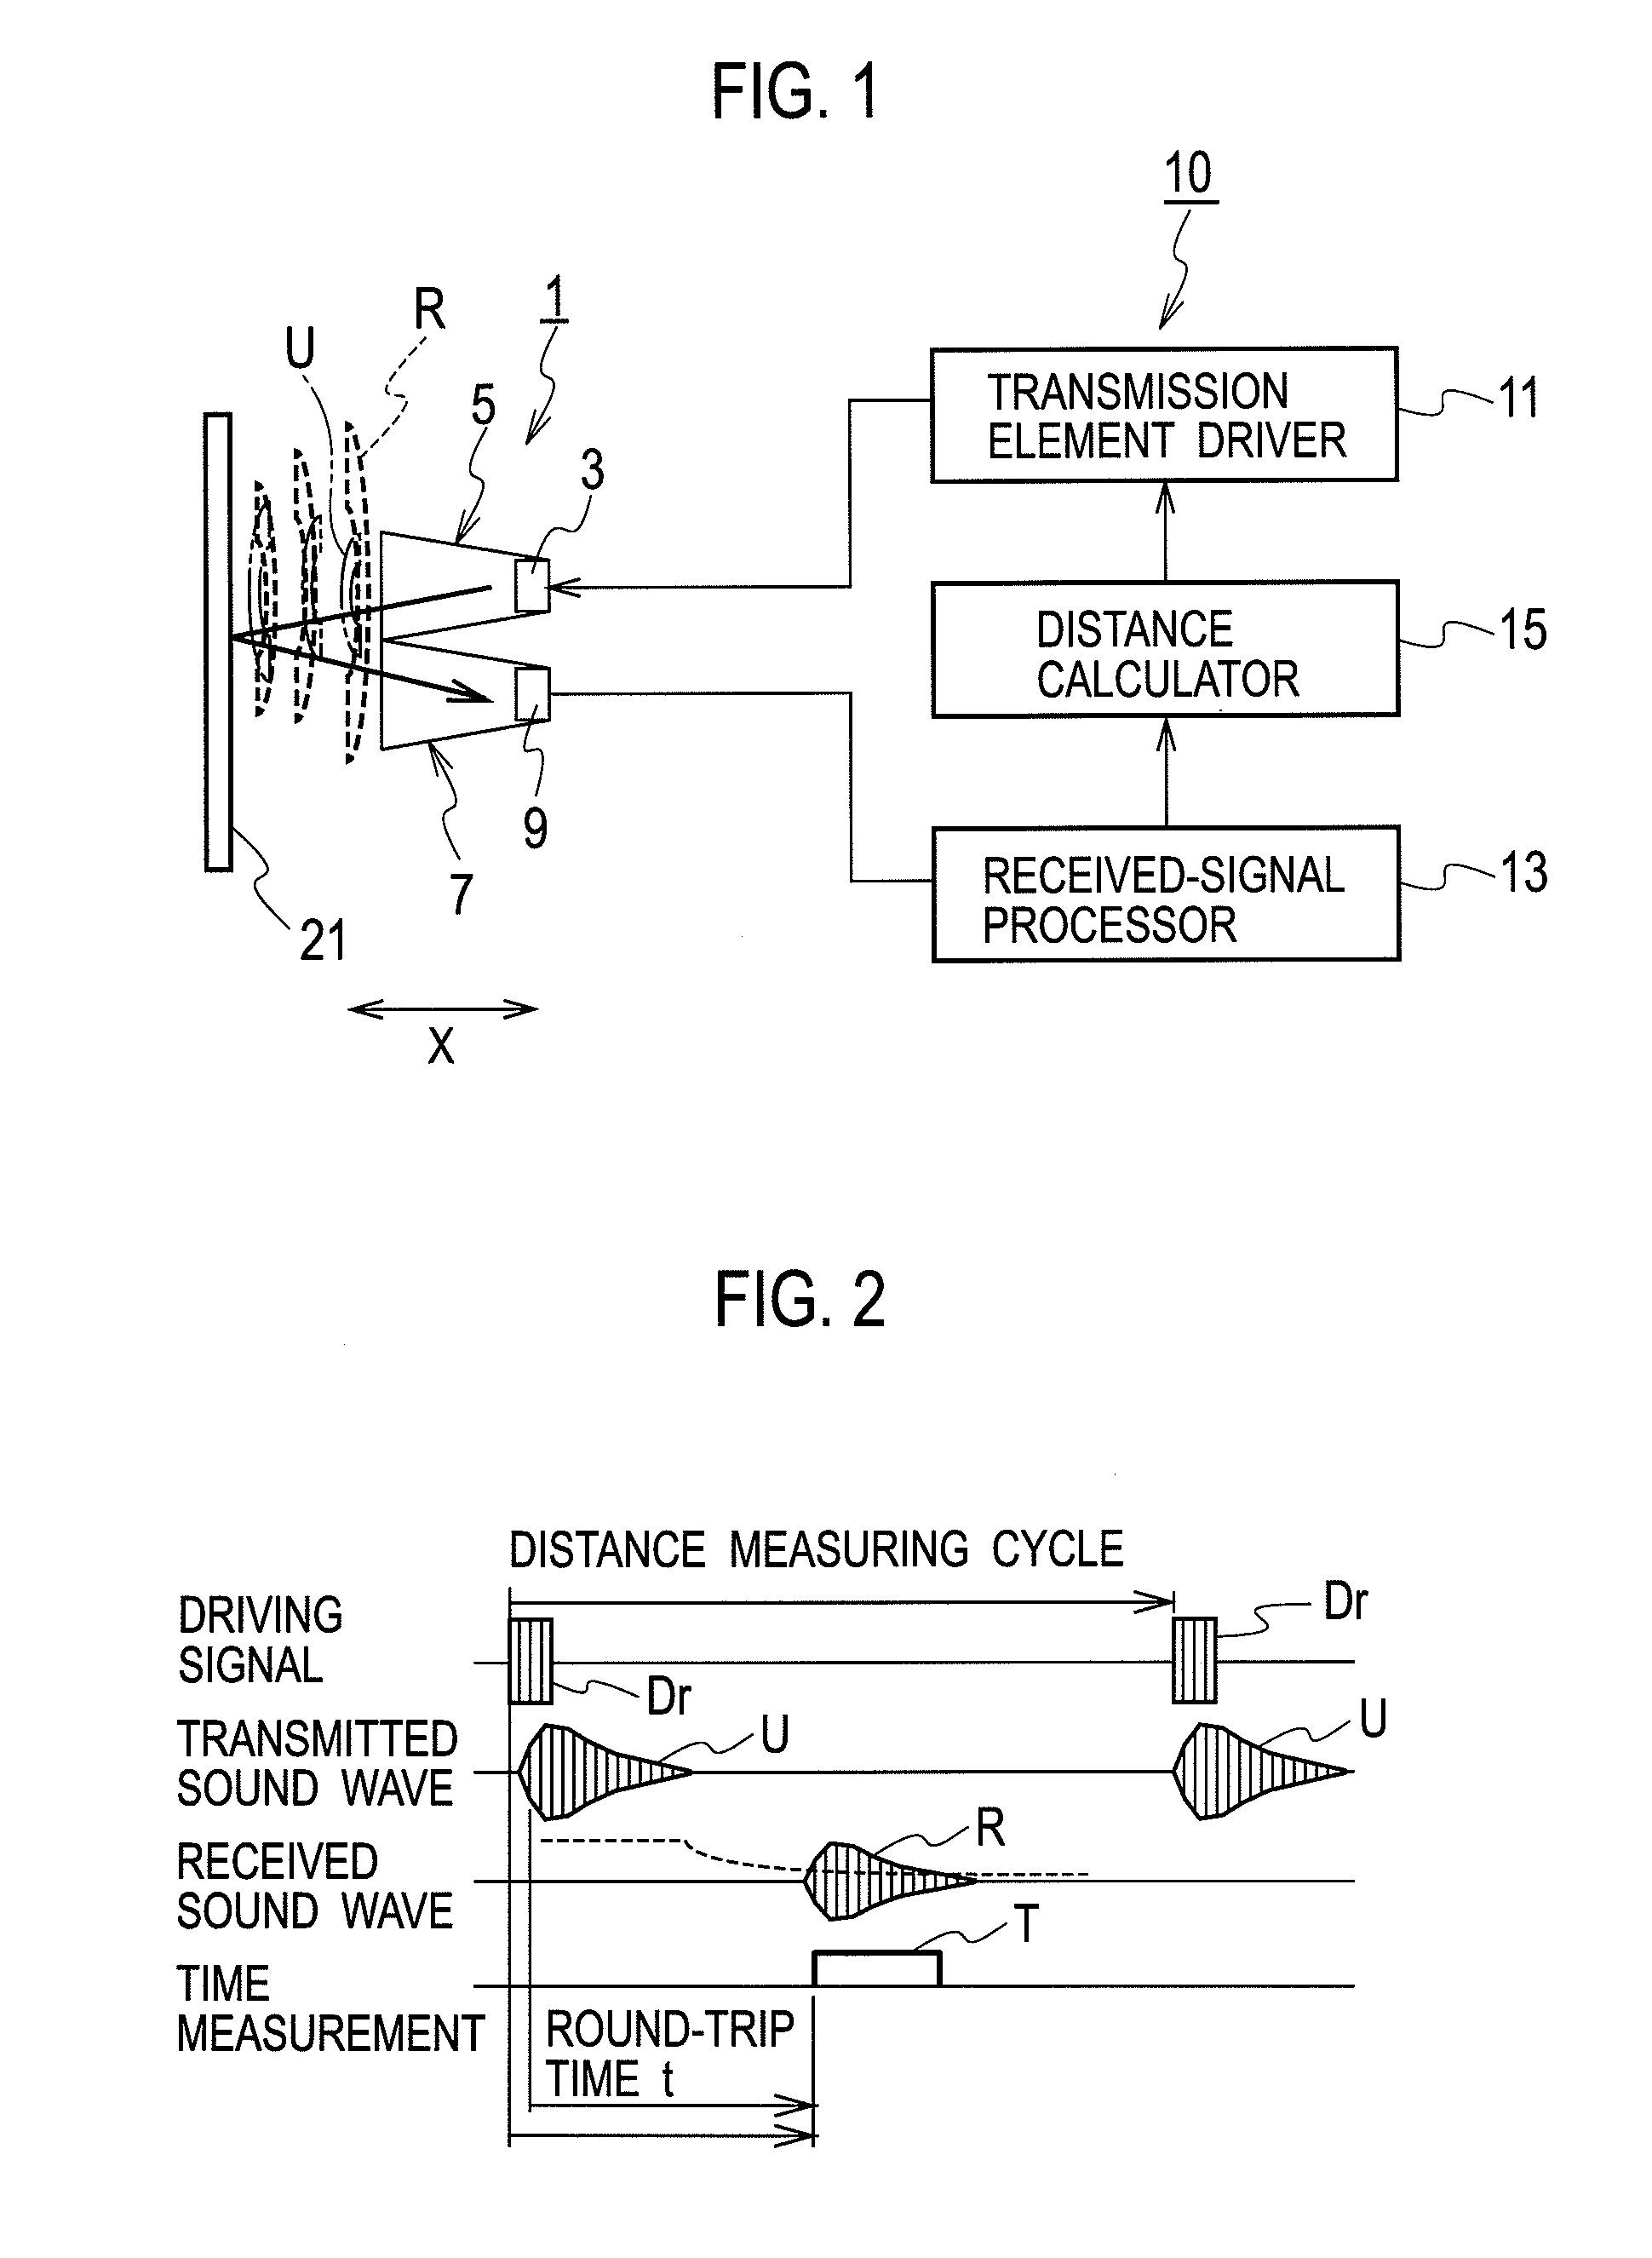 Ultrasonic sensor